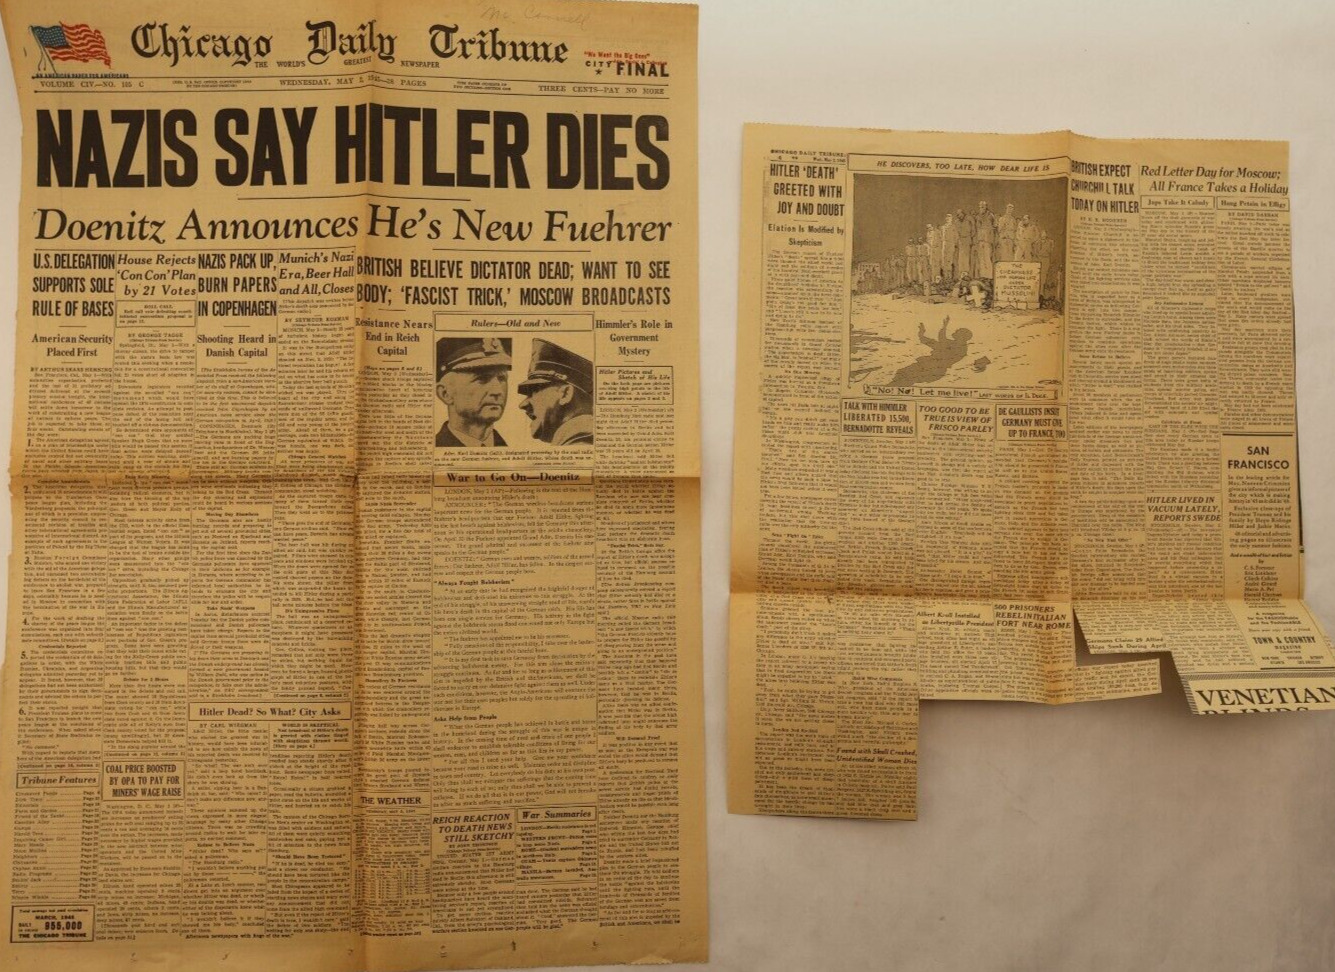 Chicago Daily Tribune 'Nazis Say Hitler Dies' vintage News Article 5/2/1945